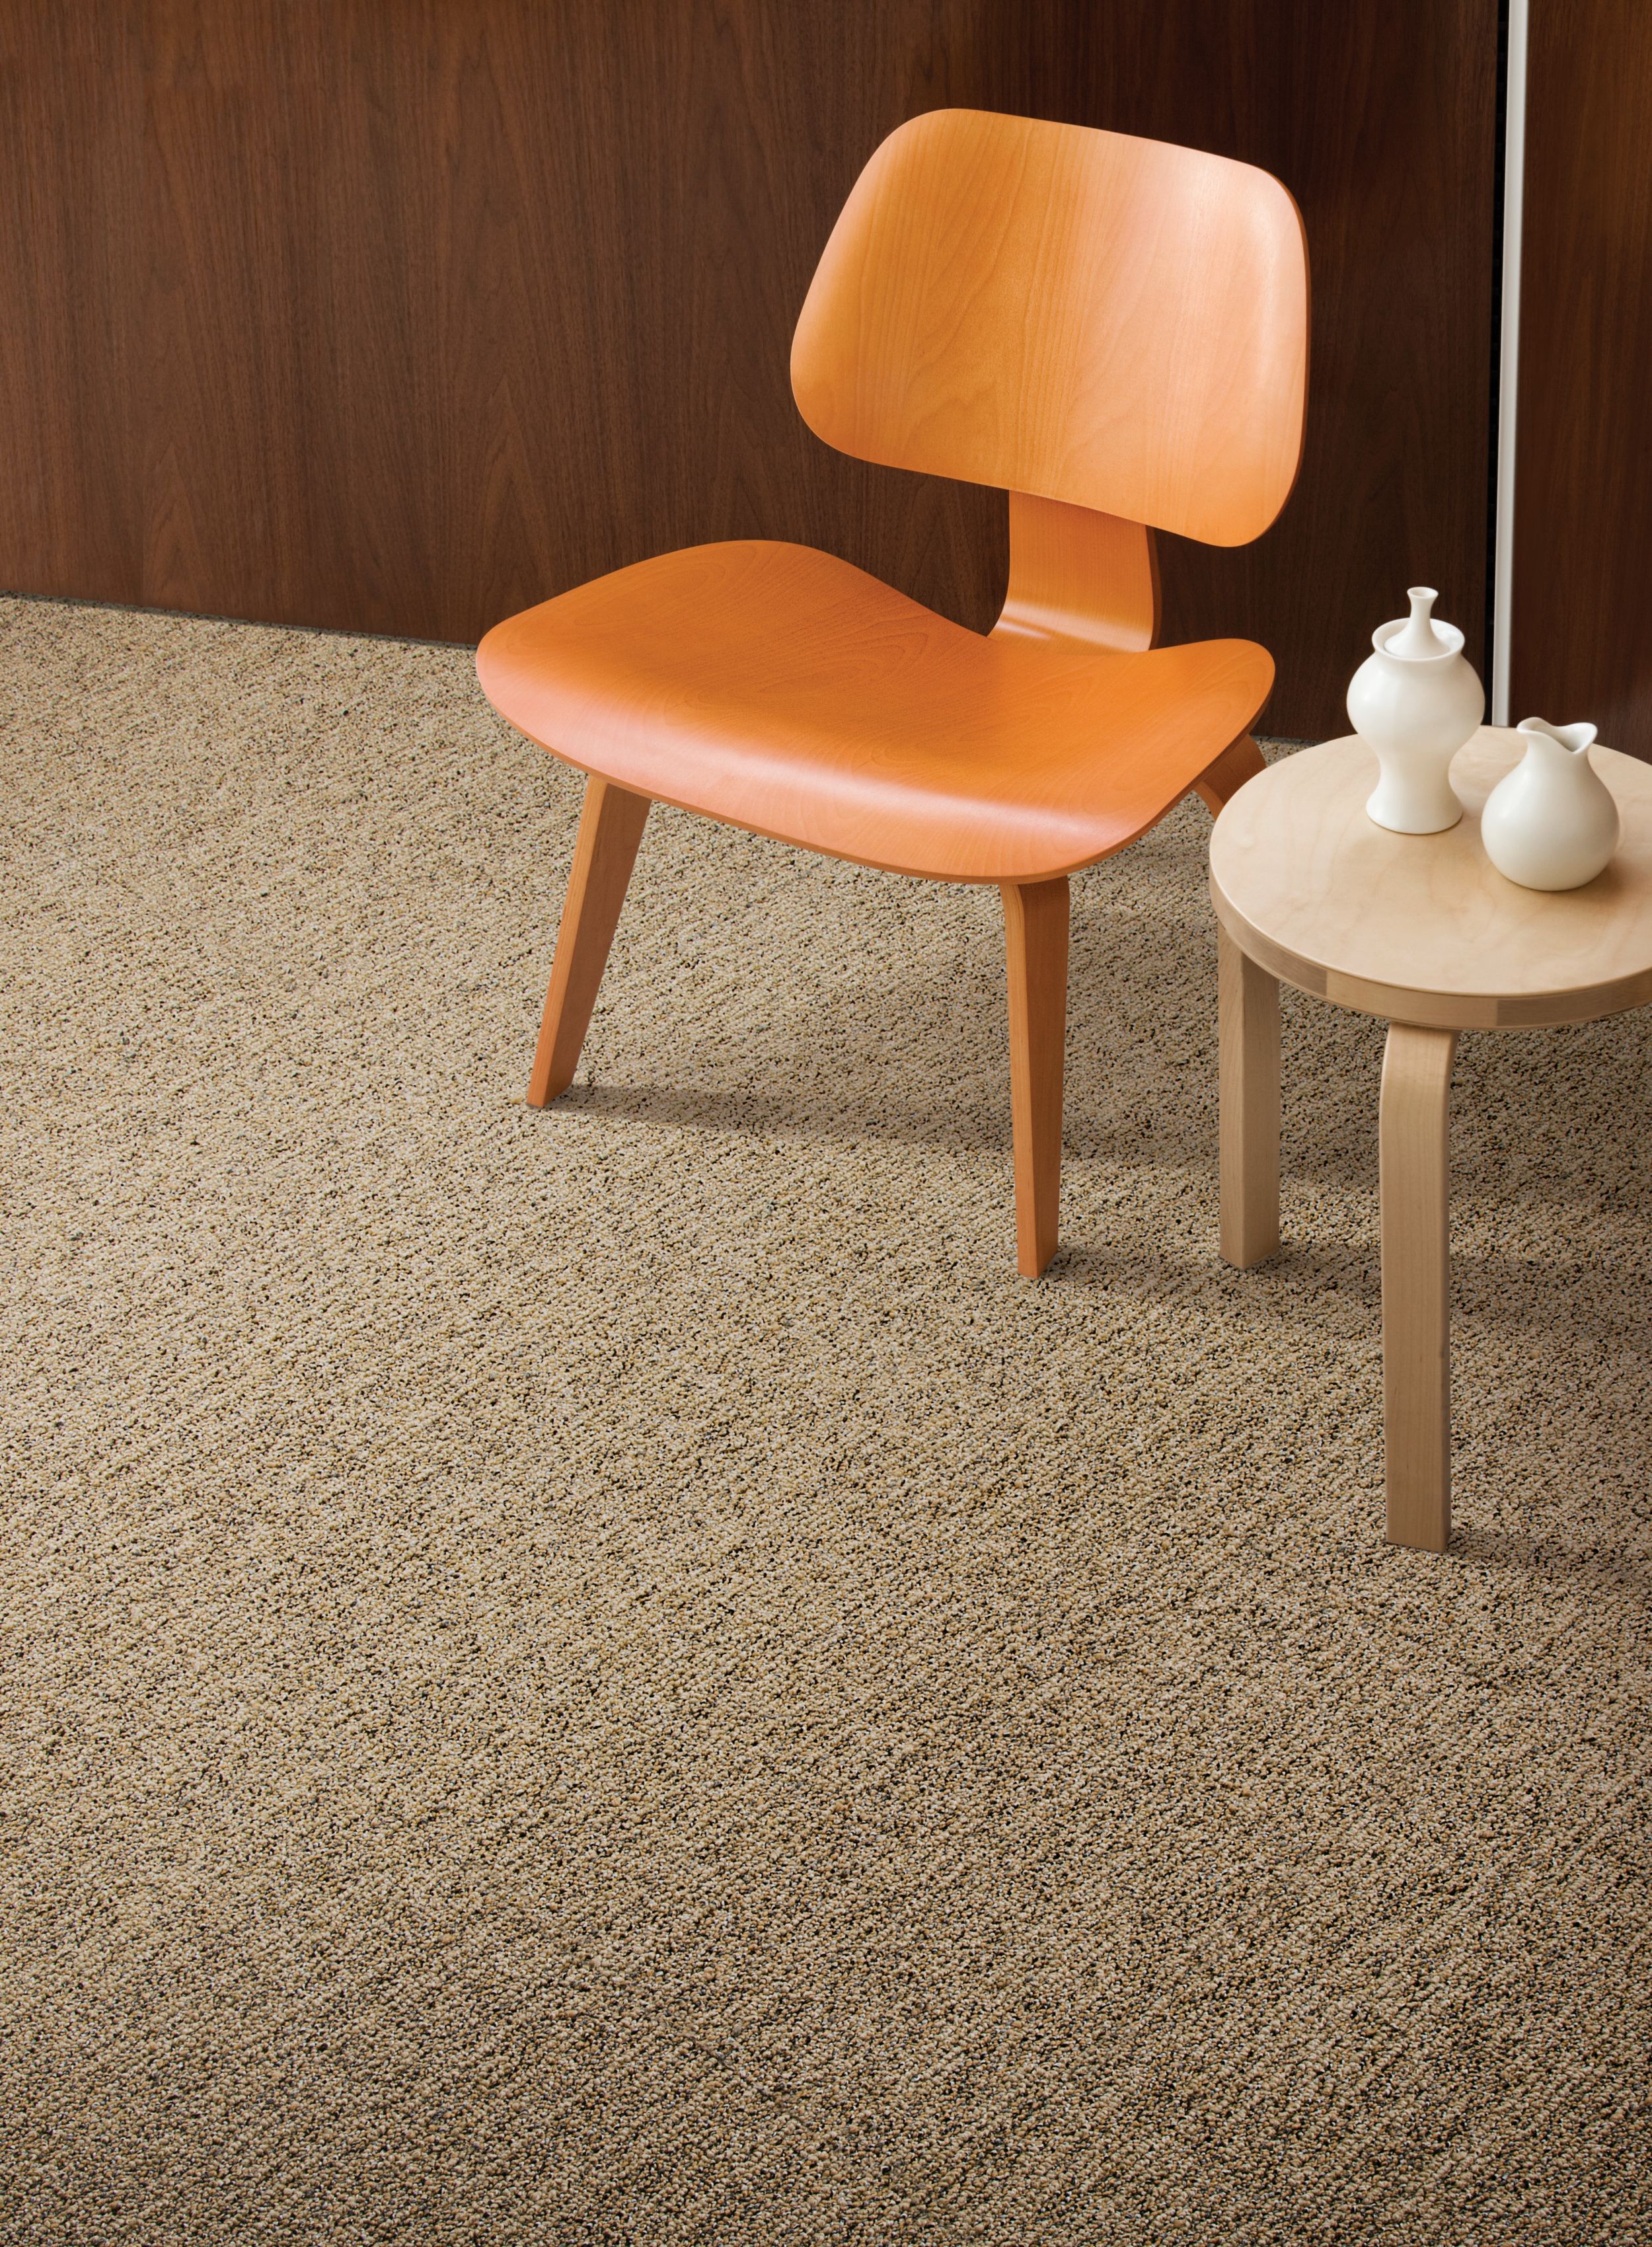 HeatherMix carpet tile in room with orange chair imagen número 1